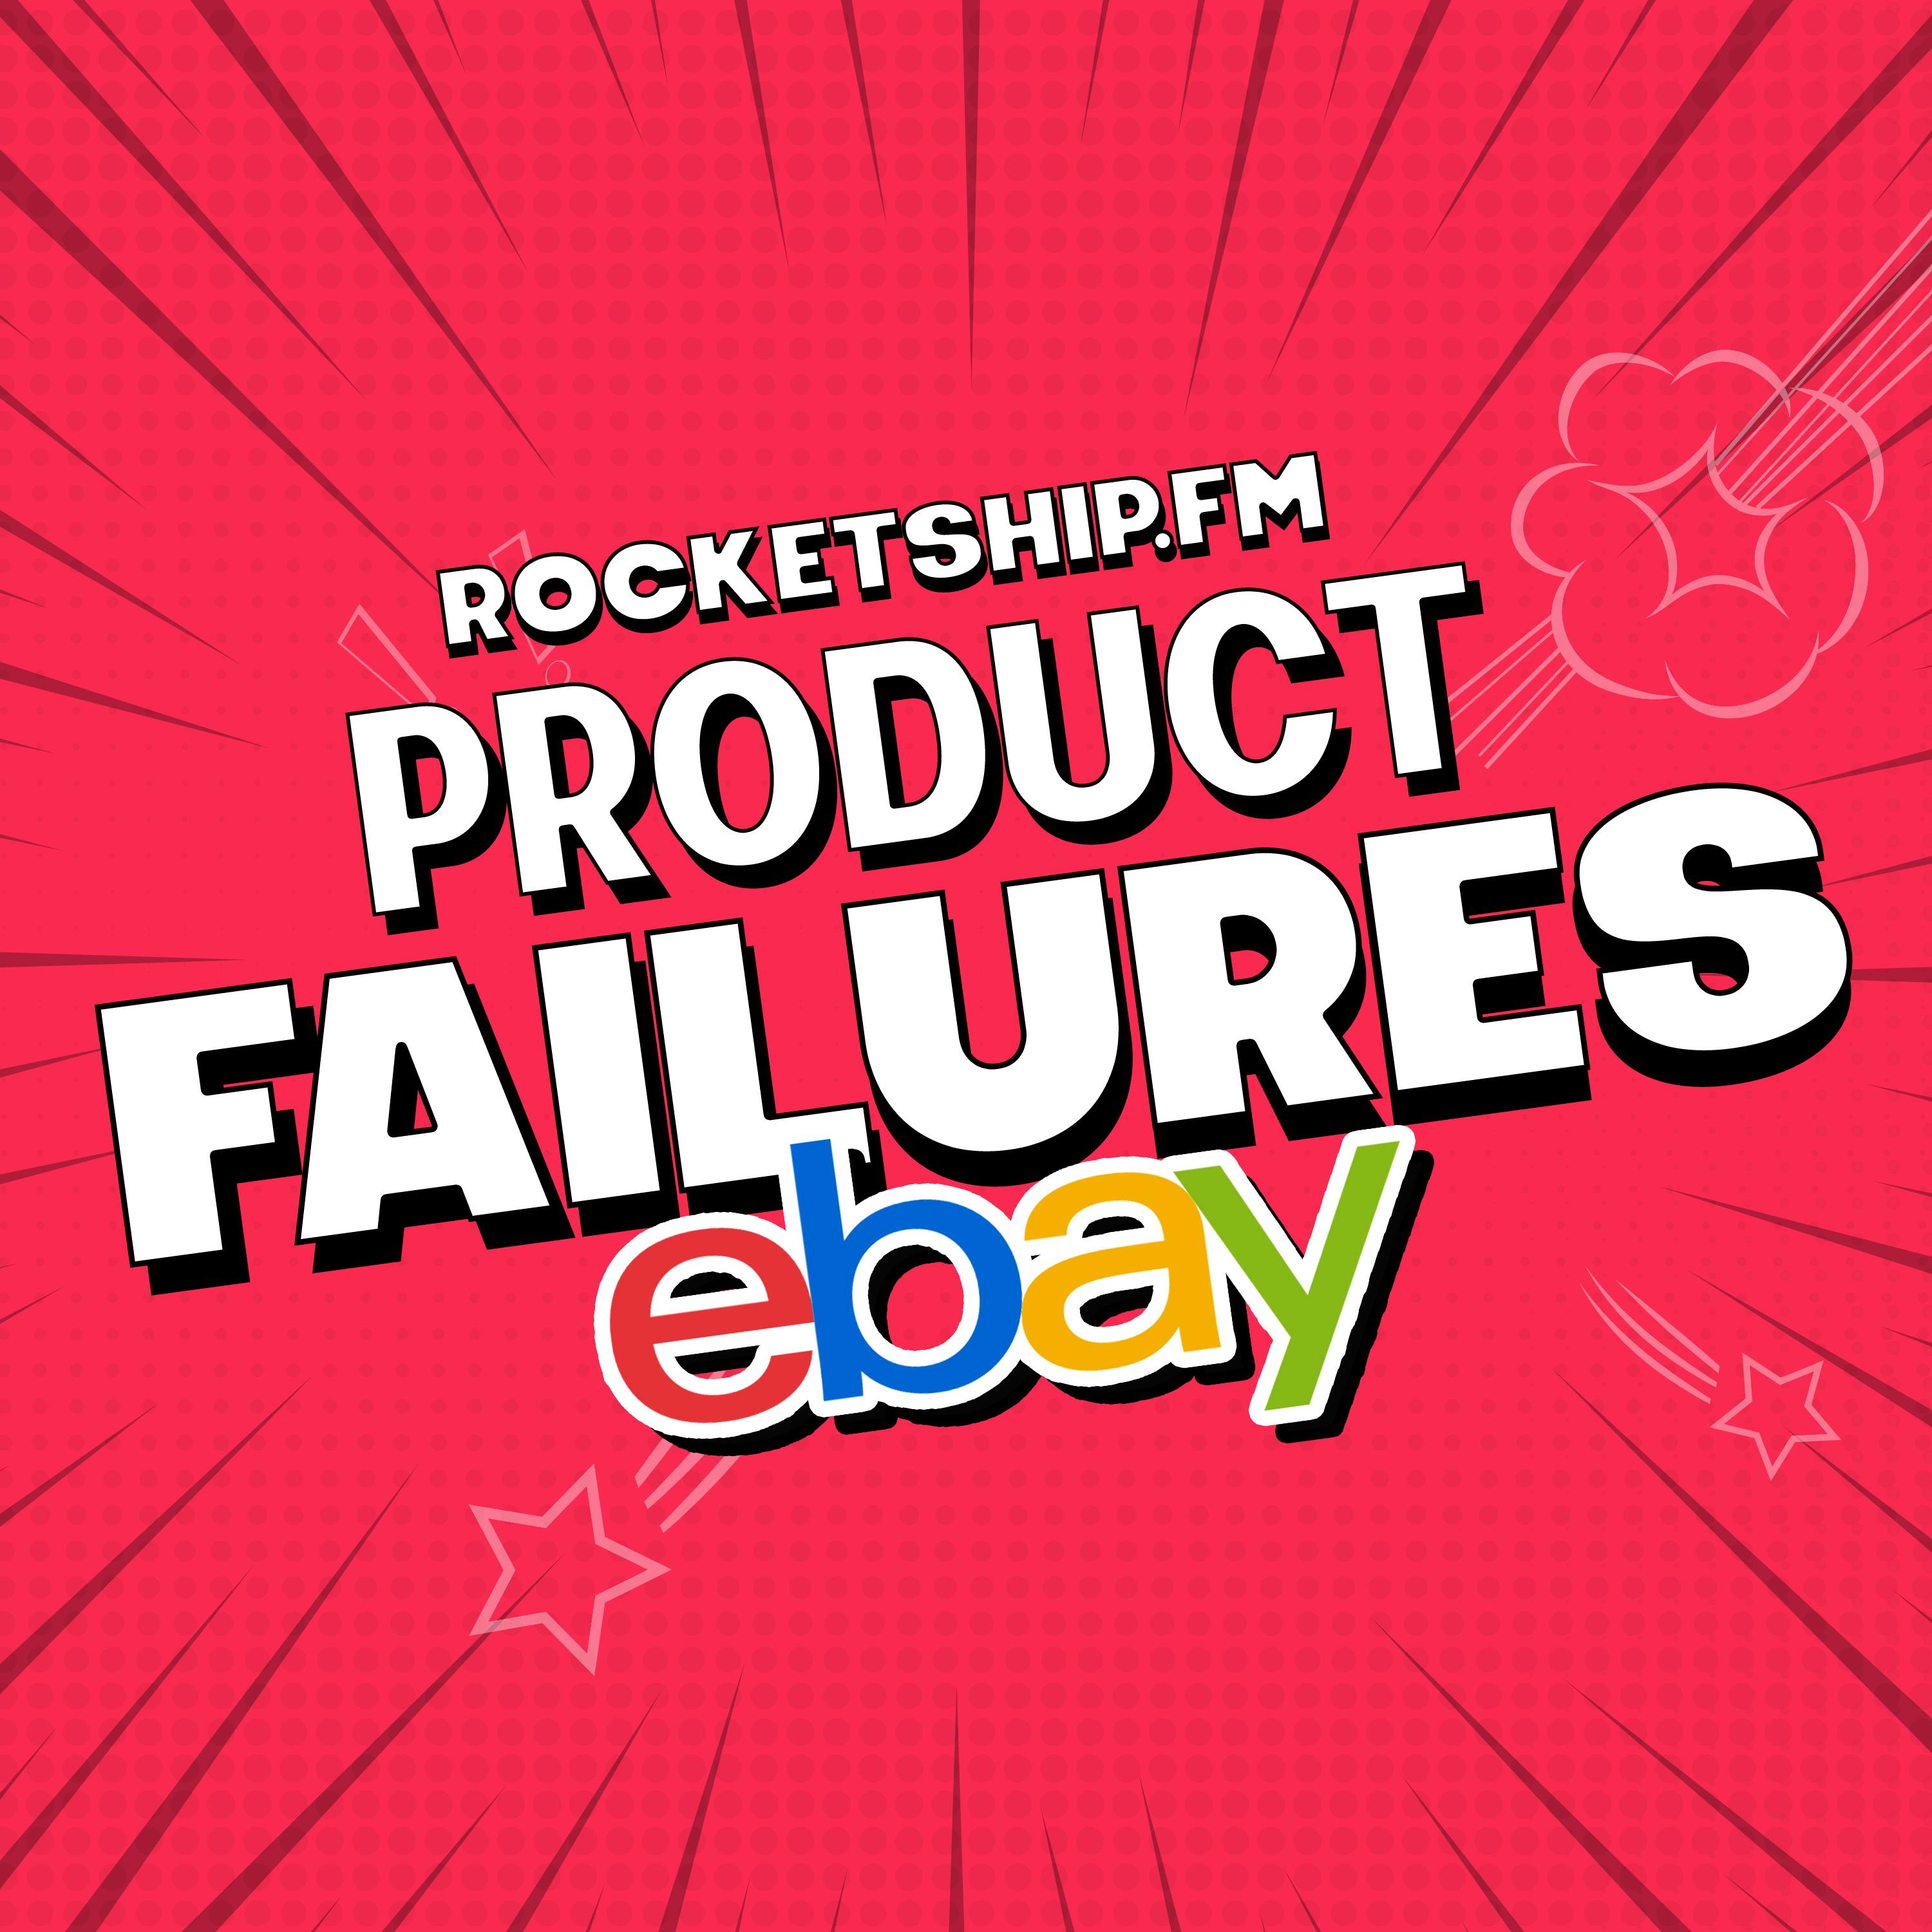 Product Failures: eBay